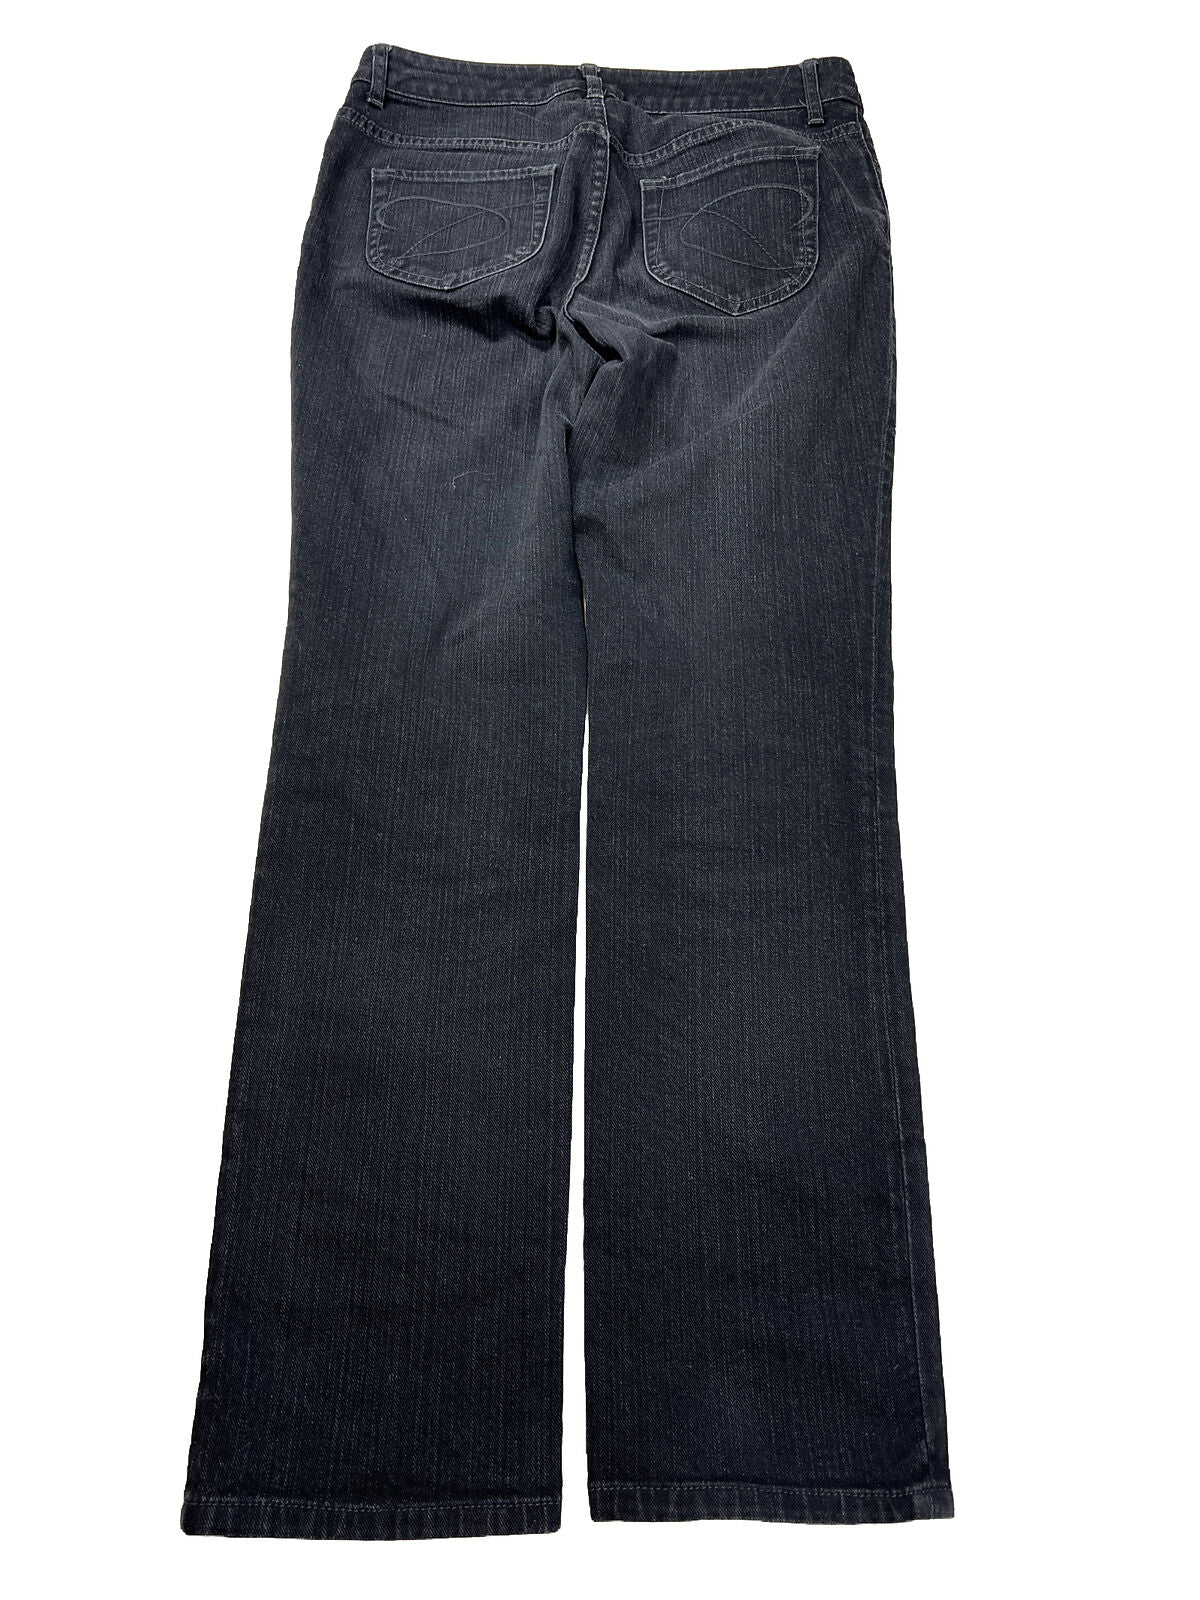 Chico's Women's Platinum Black Stretch Denim Slim Tapered Jeans - 0.5/6